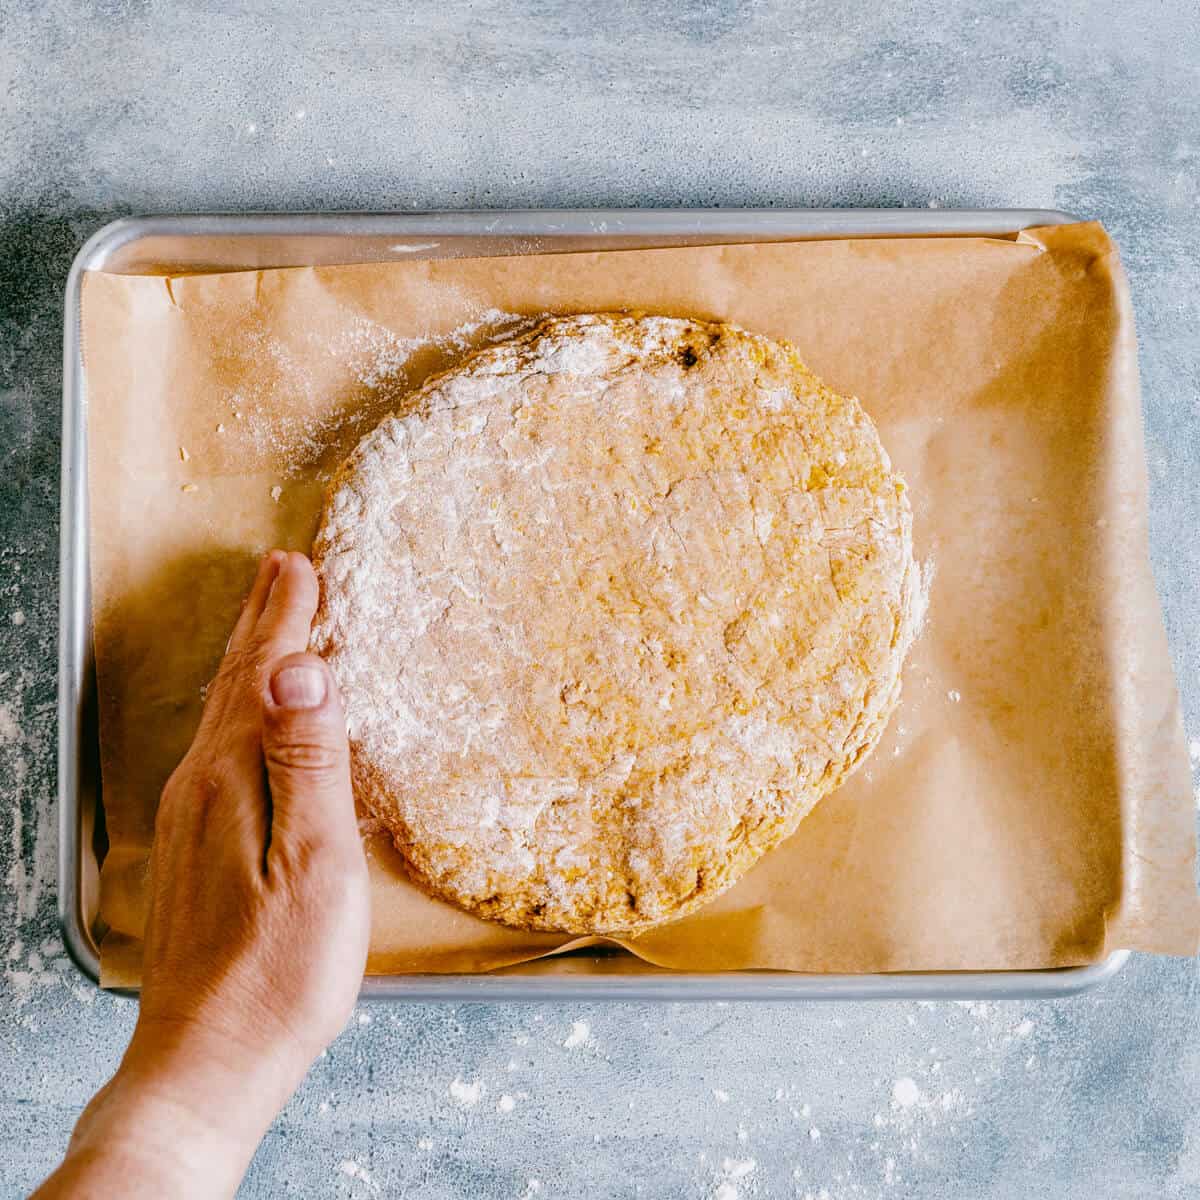 shaping pumpkin scone dough into a disc on a baking sheet.